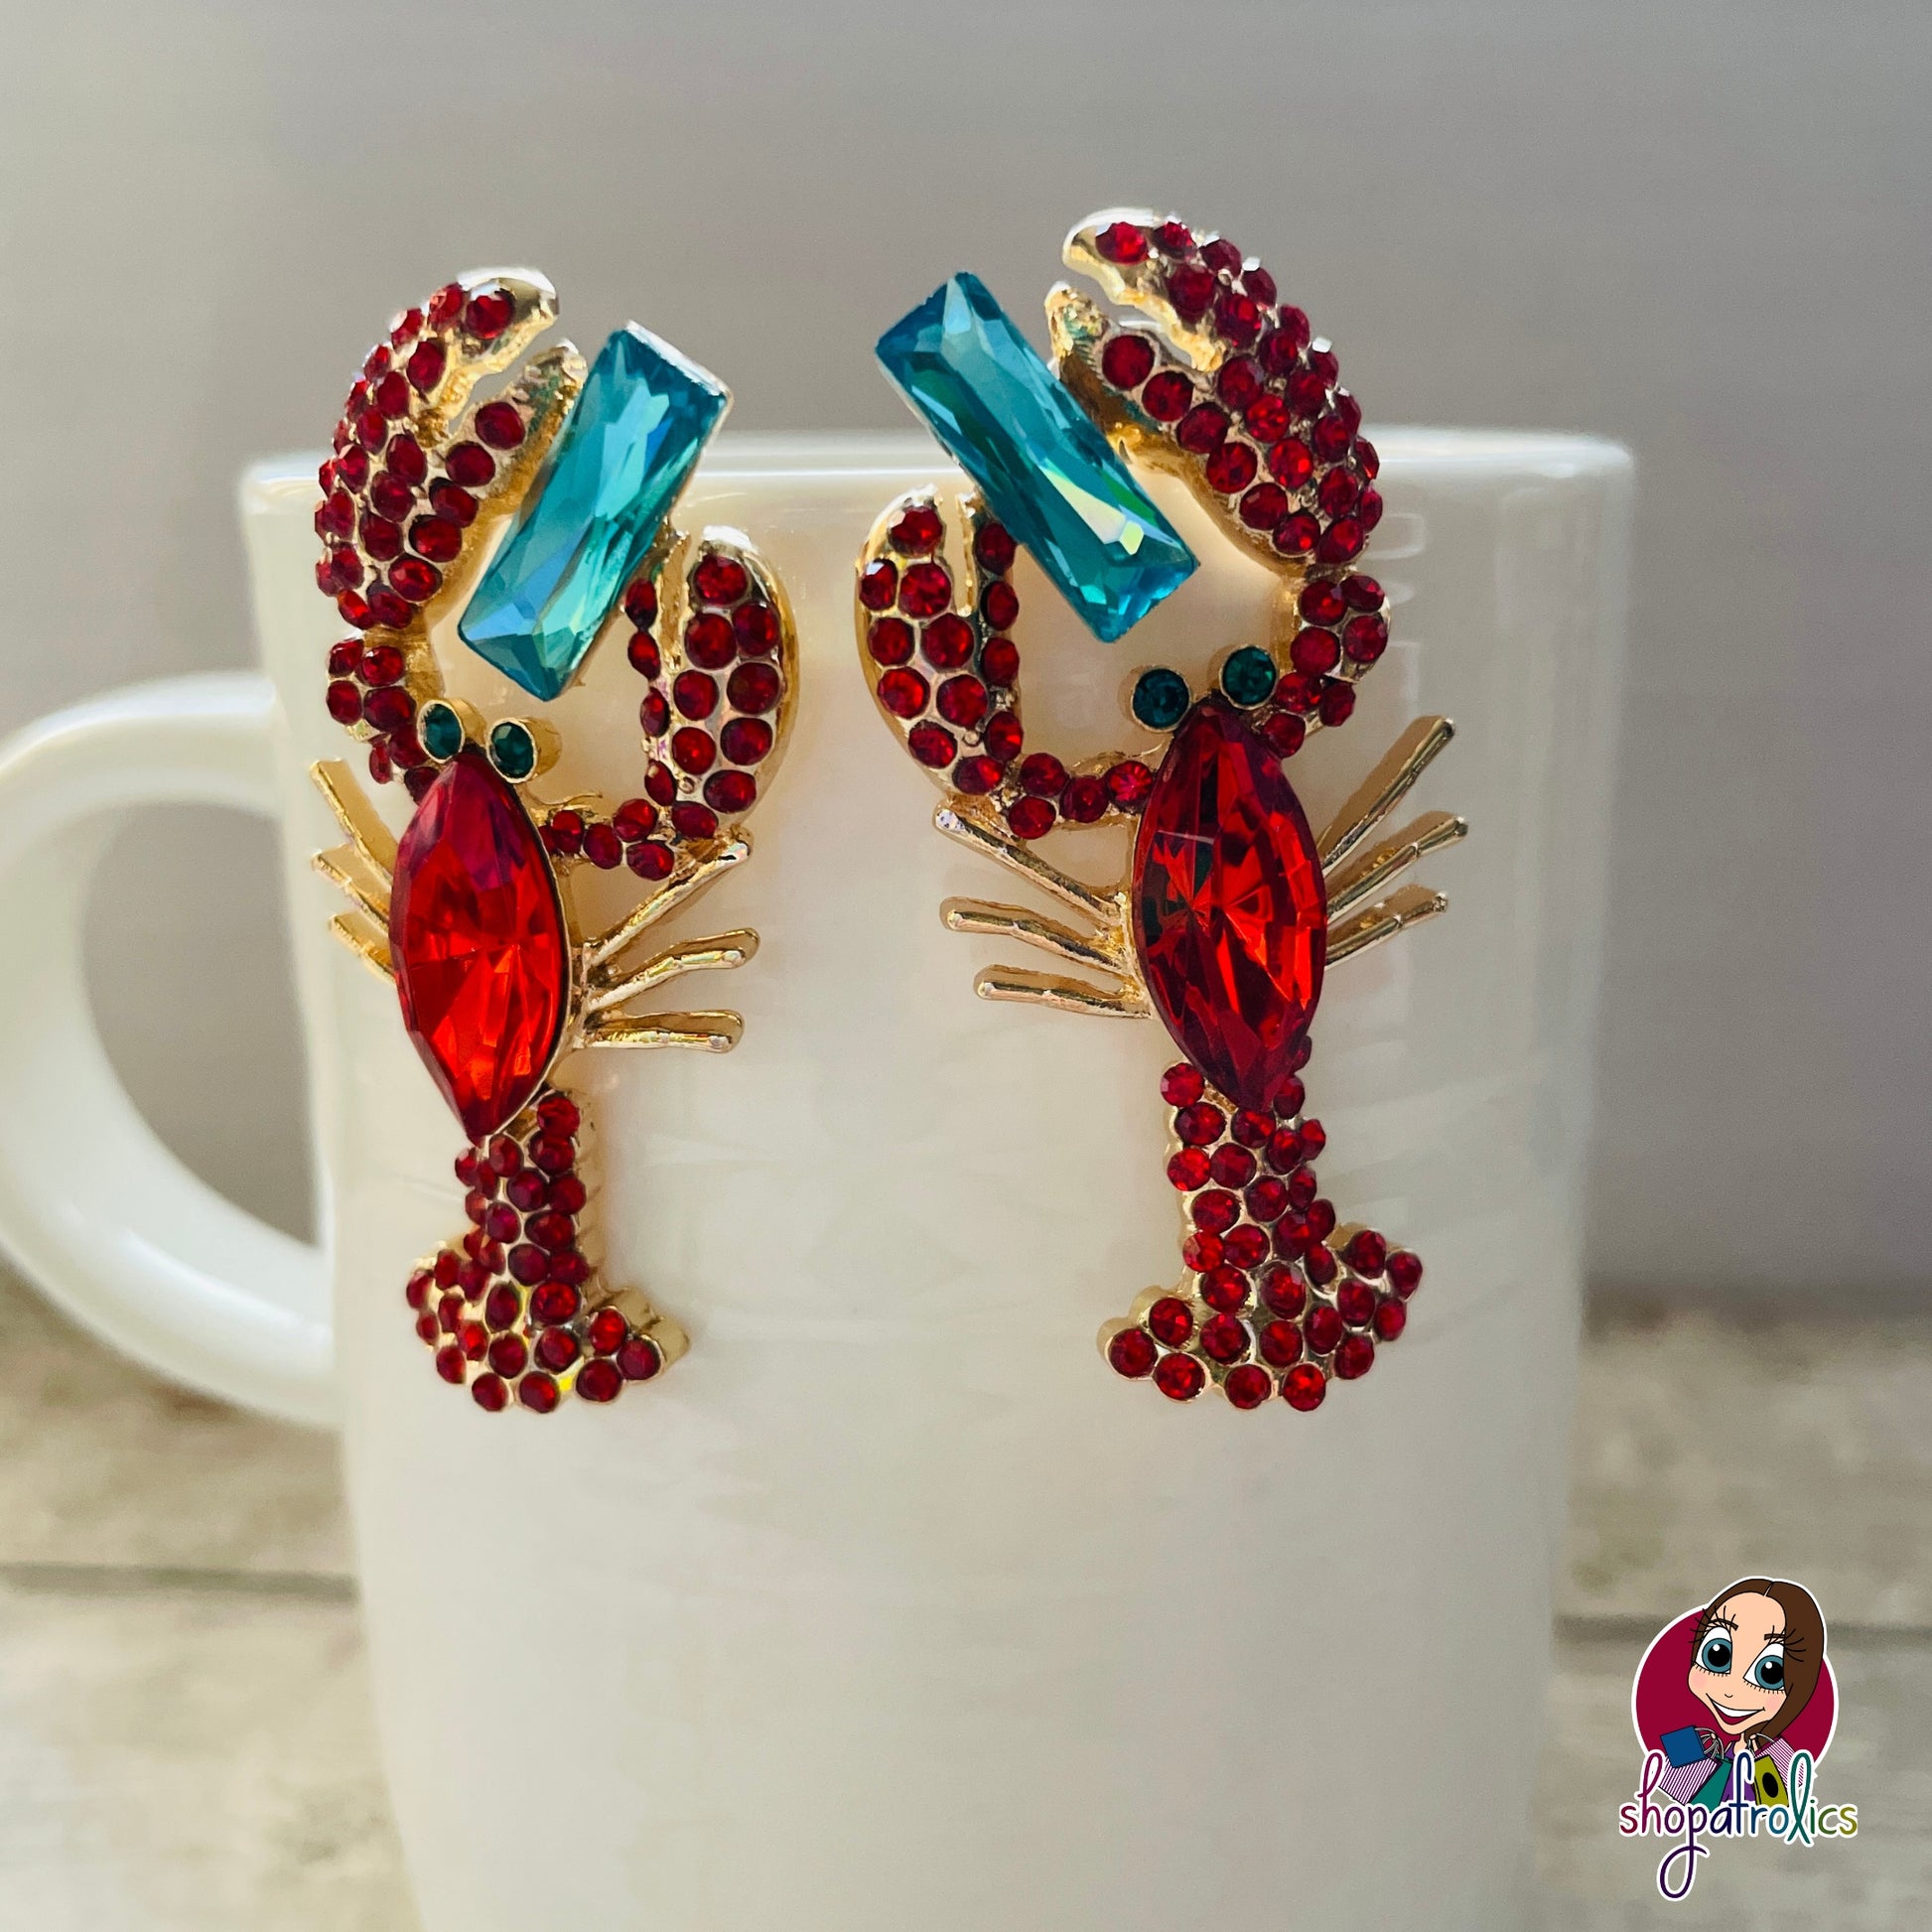 Large red lobster earrings